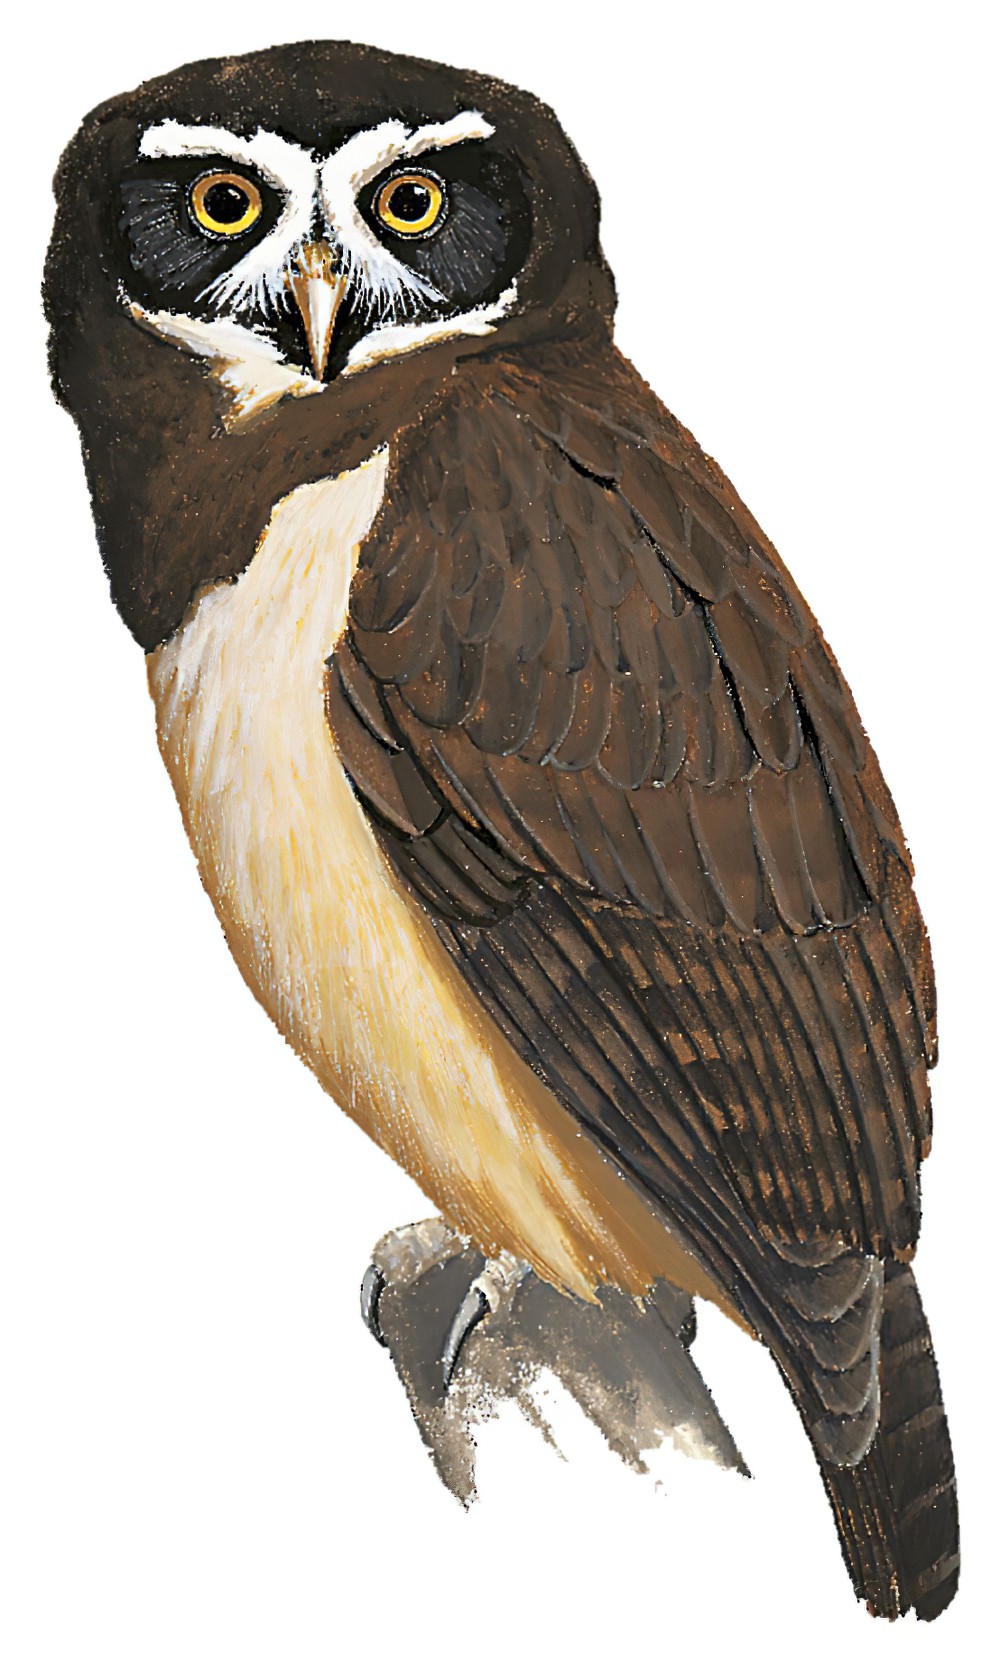 Spectacled Owl / Pulsatrix perspicillata